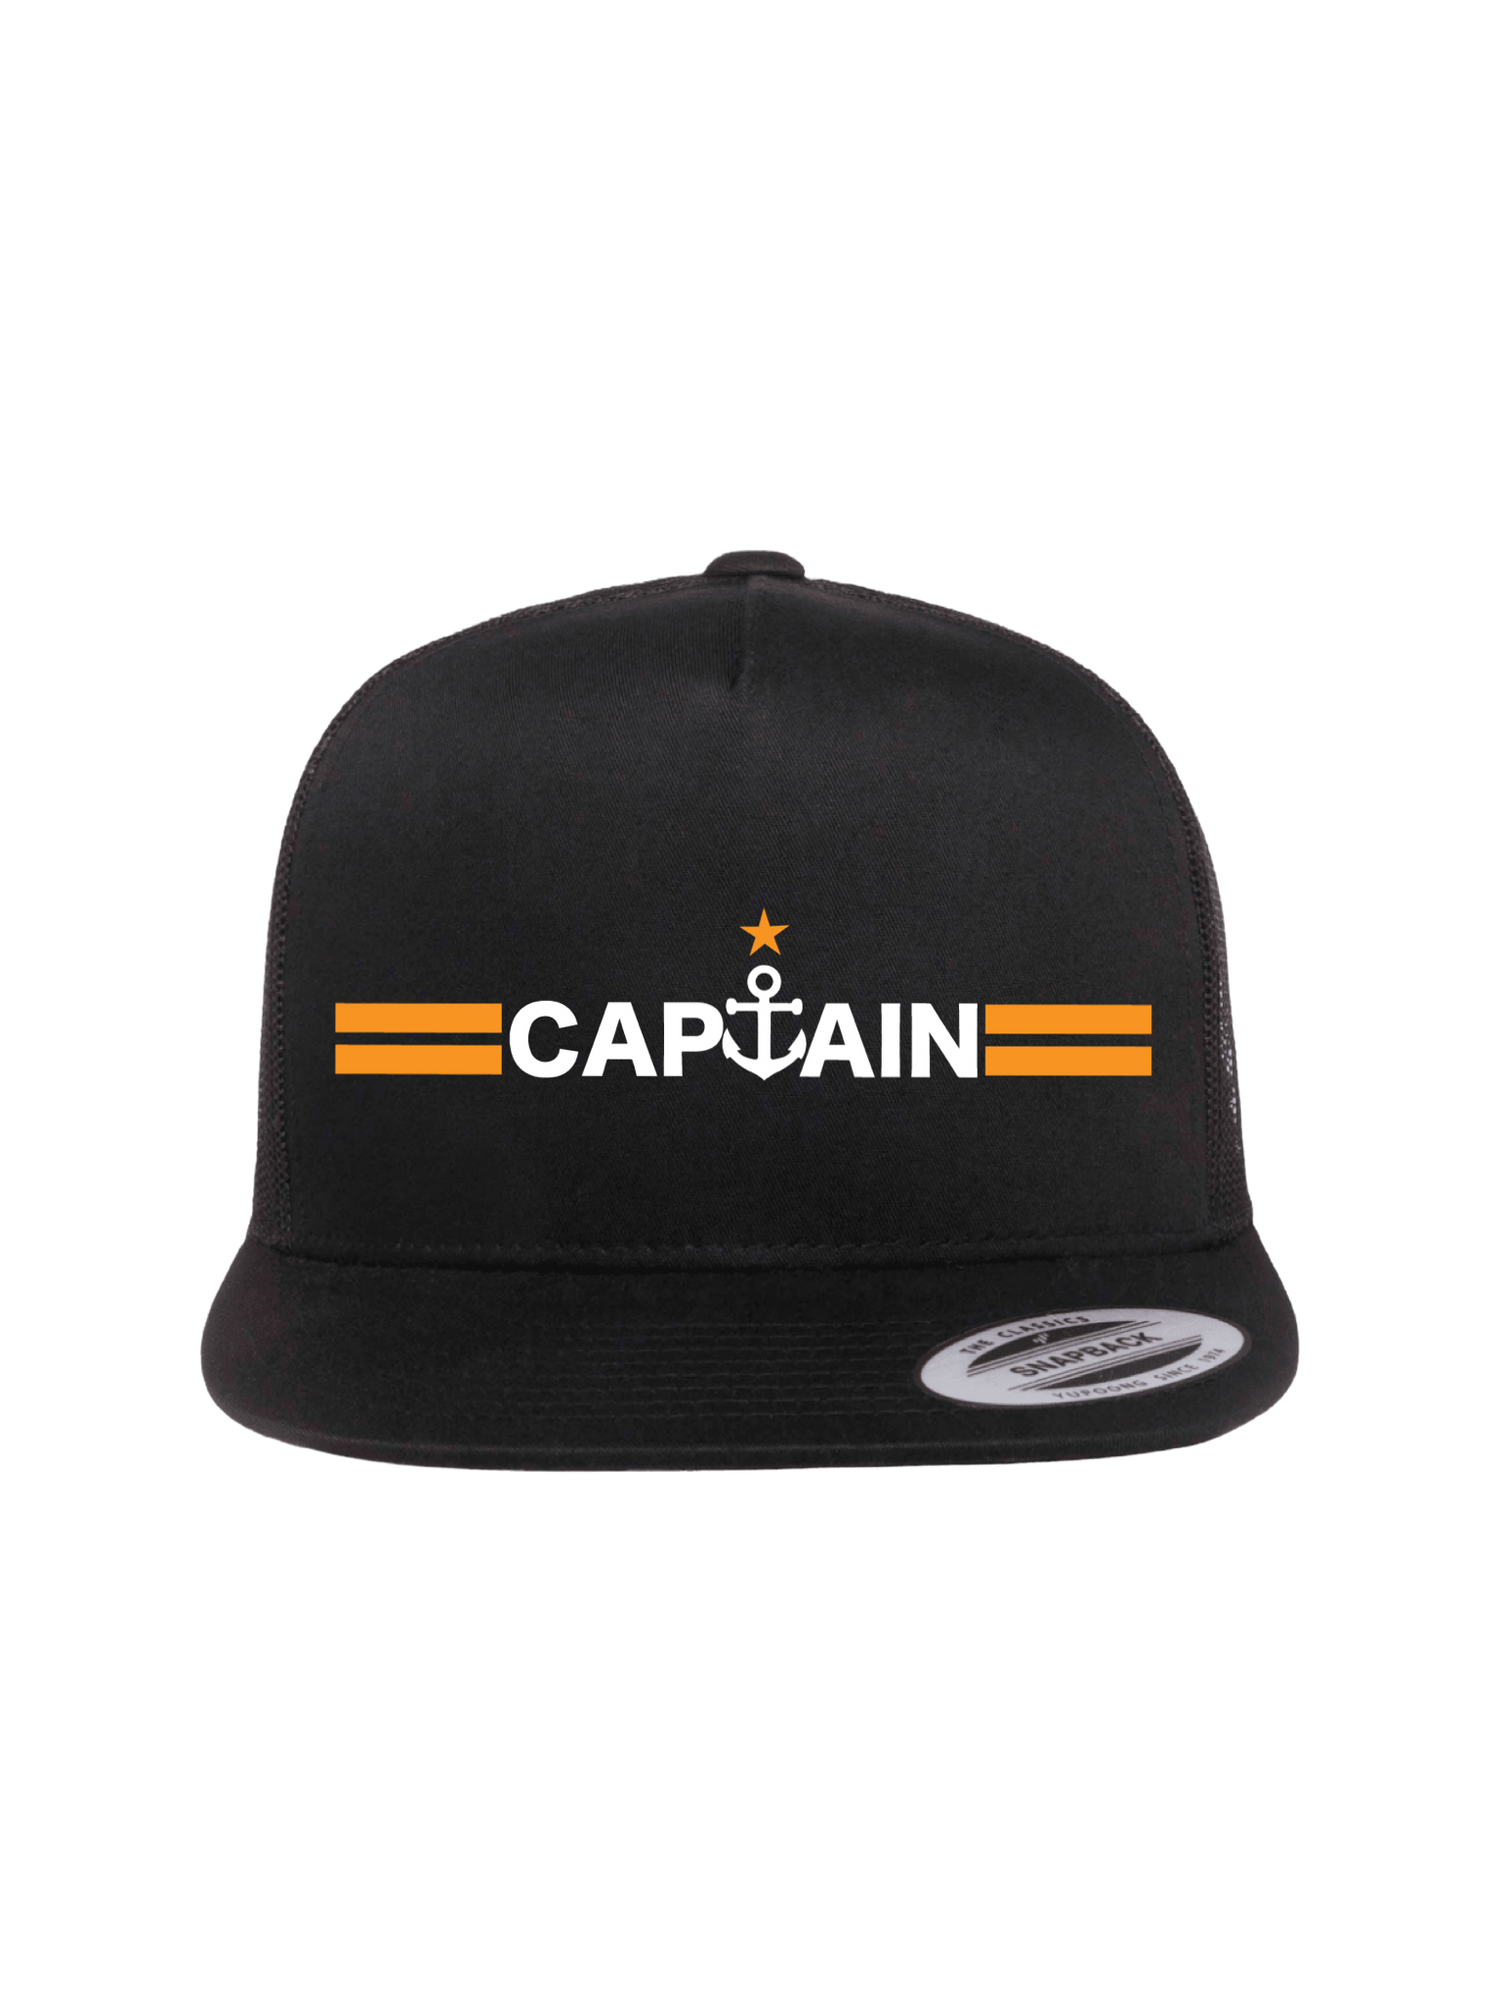 Captain Stripes Cap - Seaman&